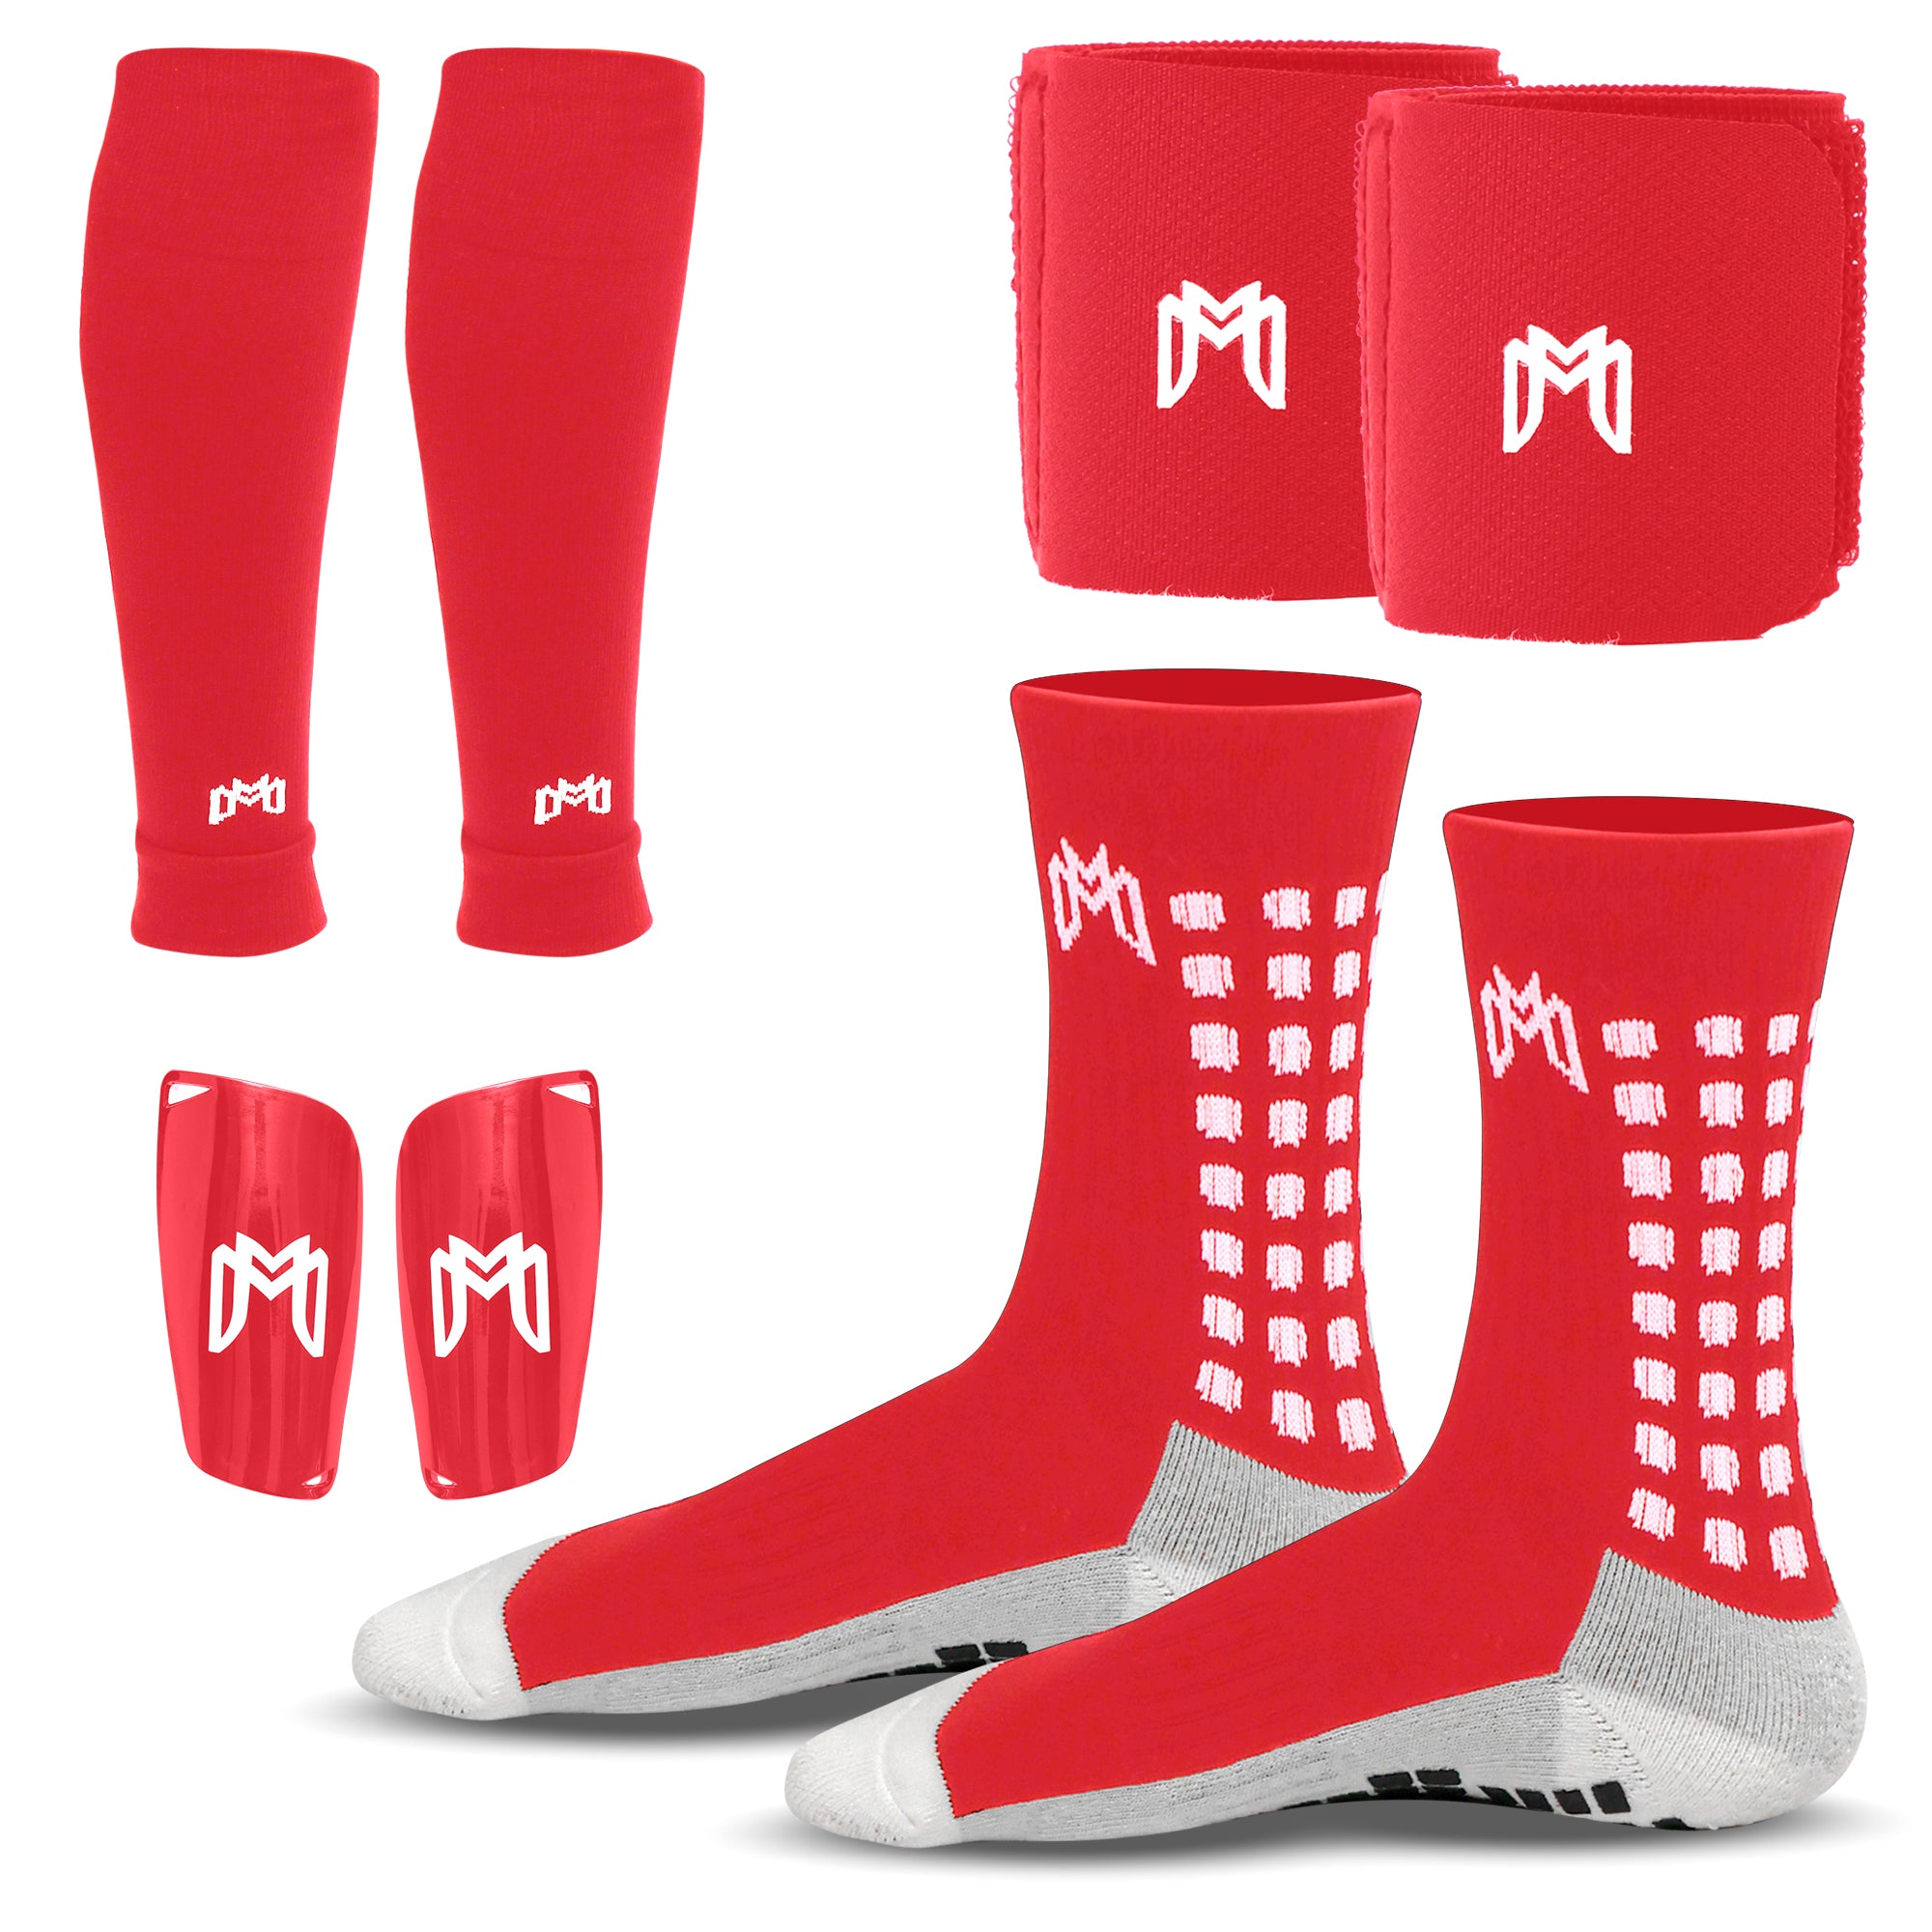 Elite Bundle (Includes Grip Socks, Shin Guards, Pre-Cut Sock Sleeves, and Shin Guard Straps)